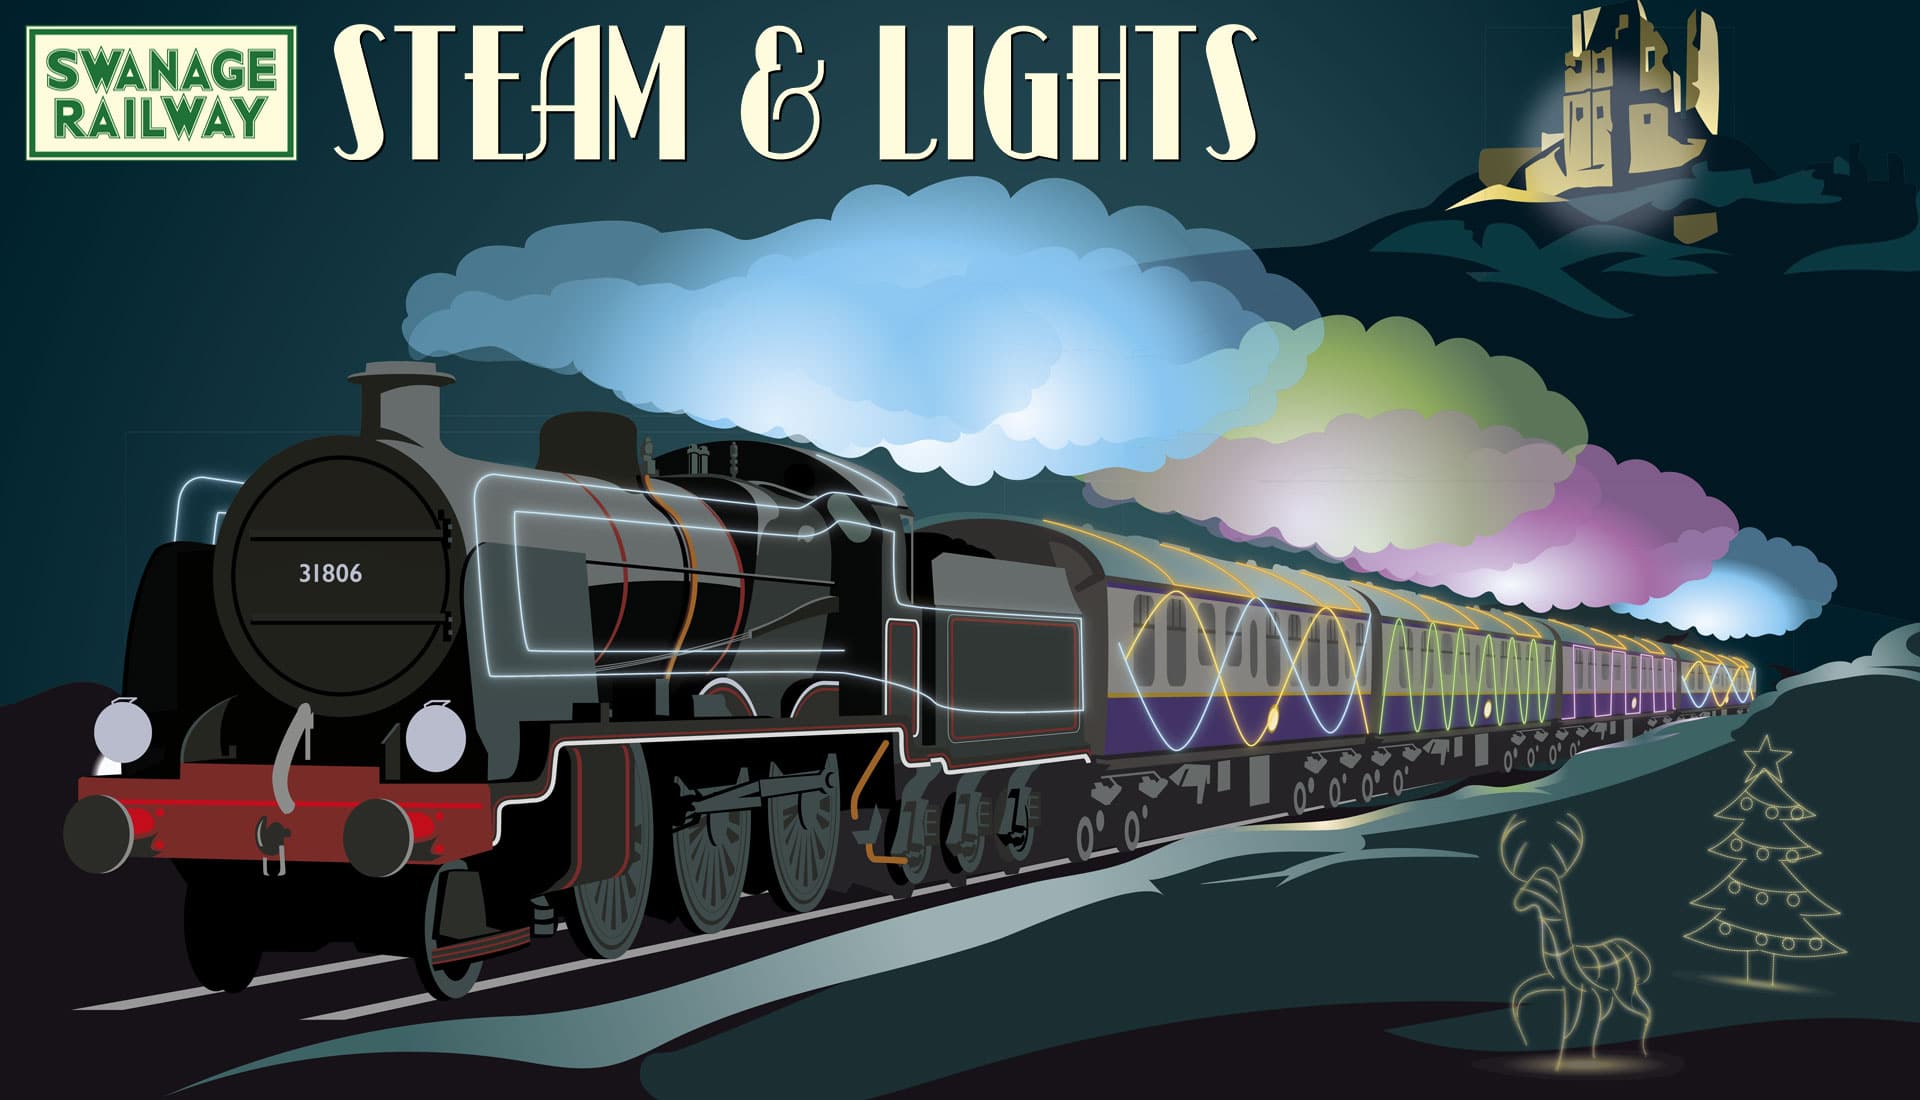 purbeck community rail partnership swanage railway steam & lights this christmas 1920x1100px